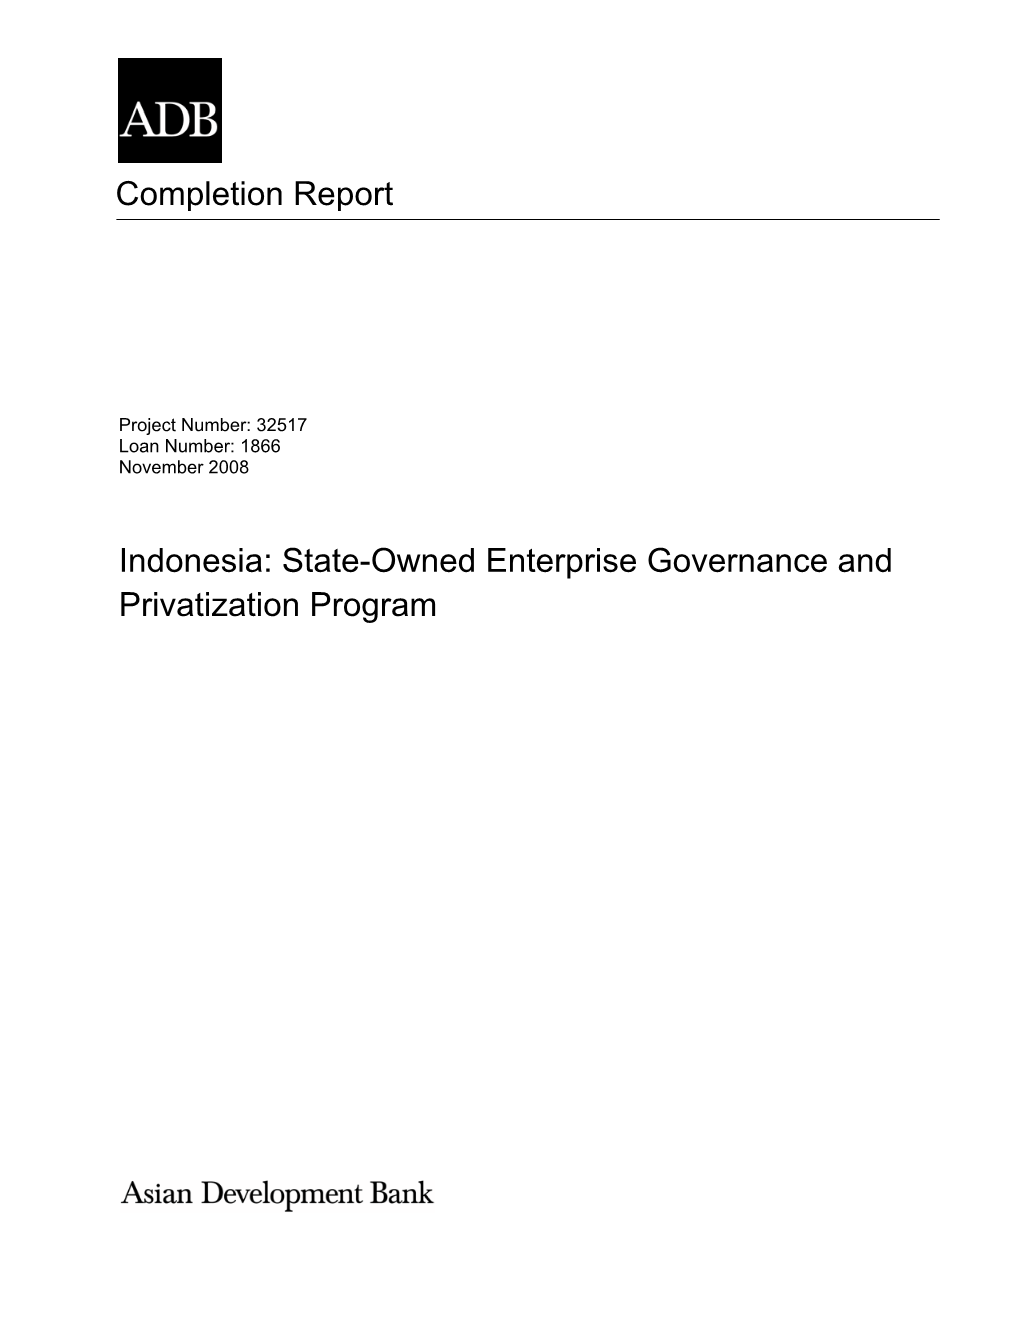 State-Owned Enterprise Governance and Privatization Program